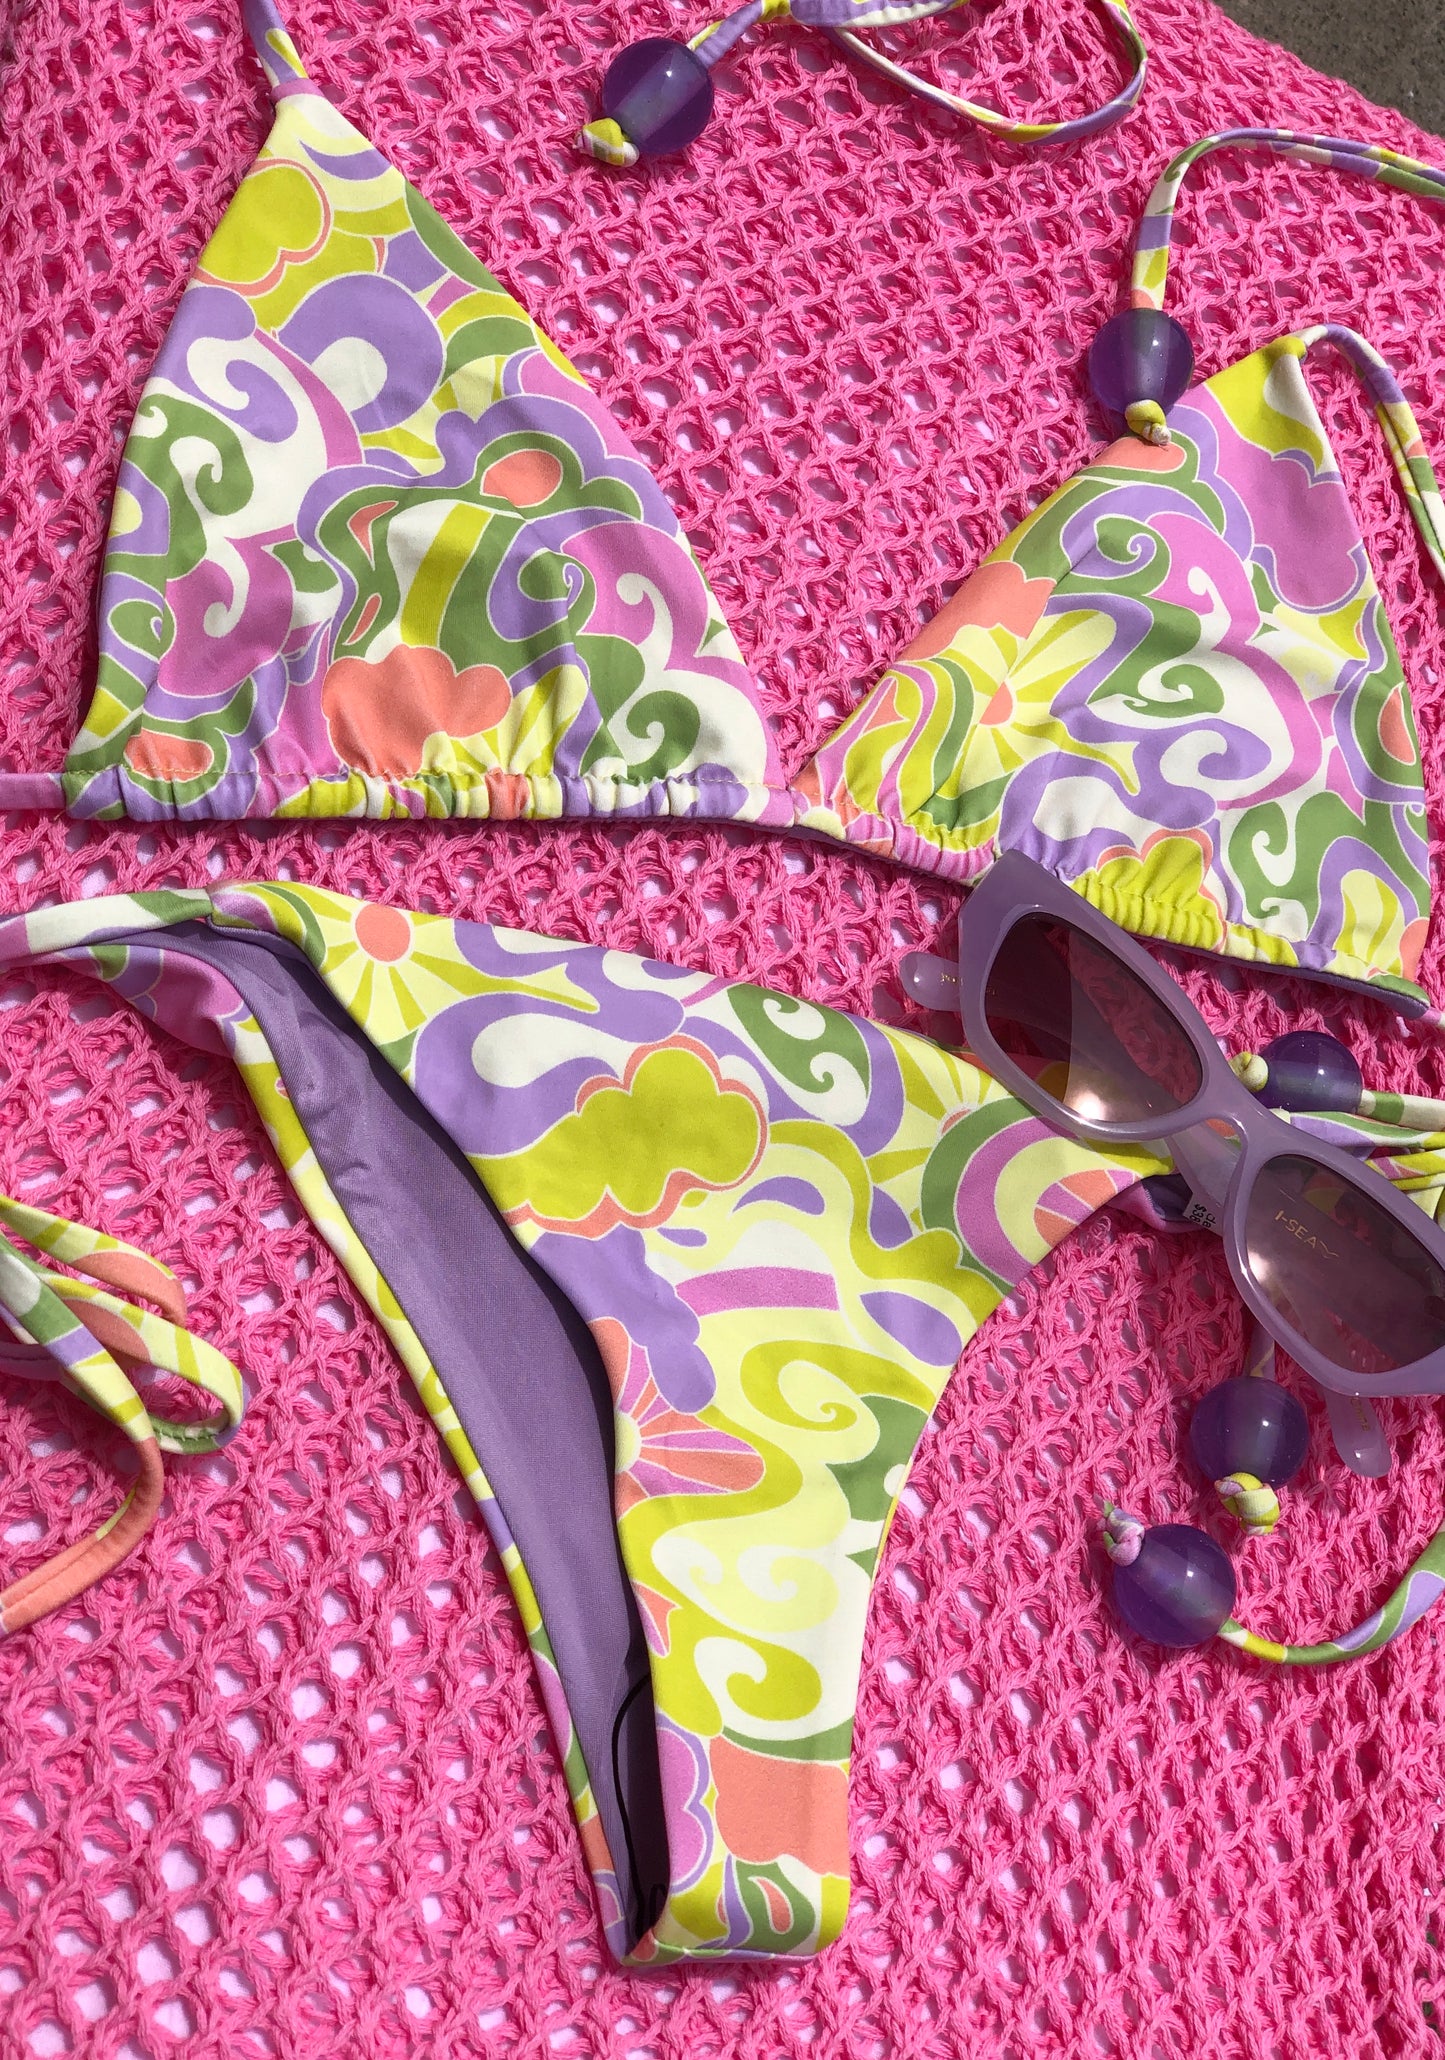 green, purple, and pink swirl print triangle bikini top and matching tie side bottoms